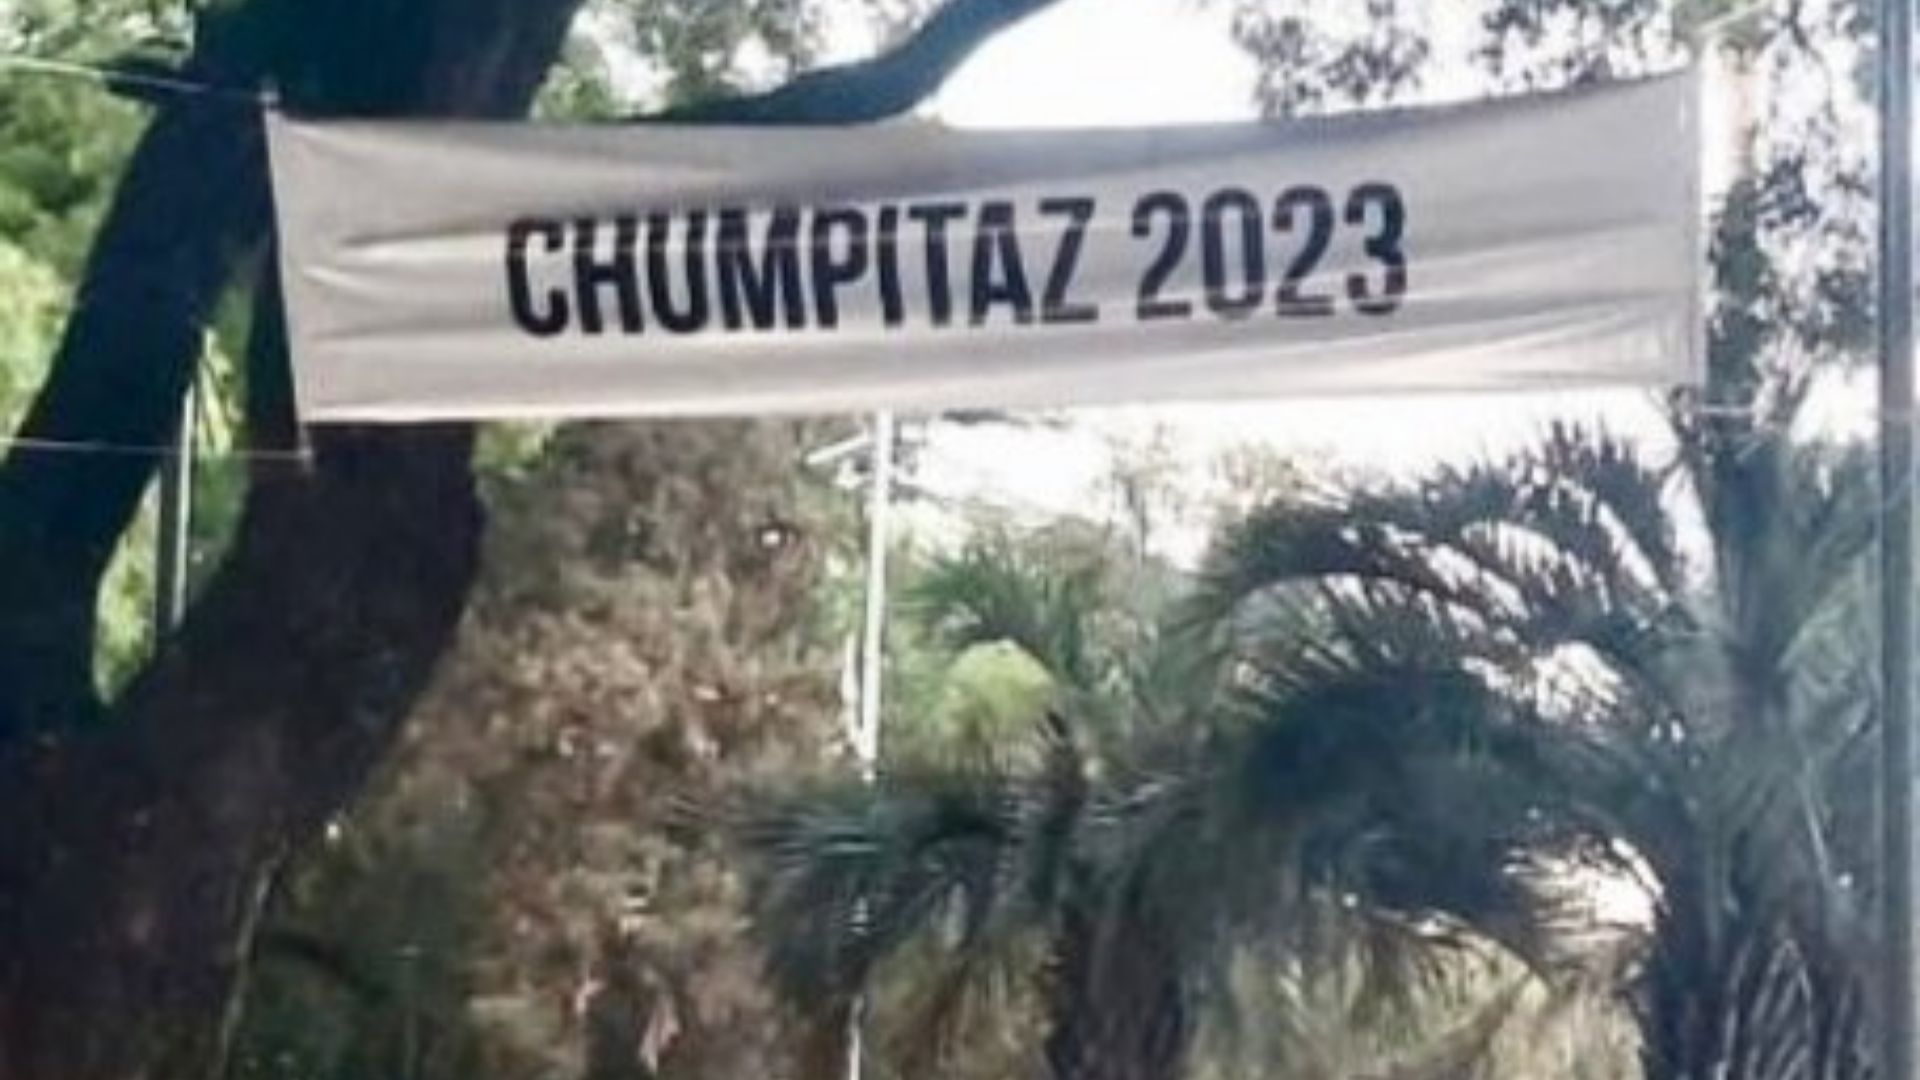 chumpitaz2023.jpg